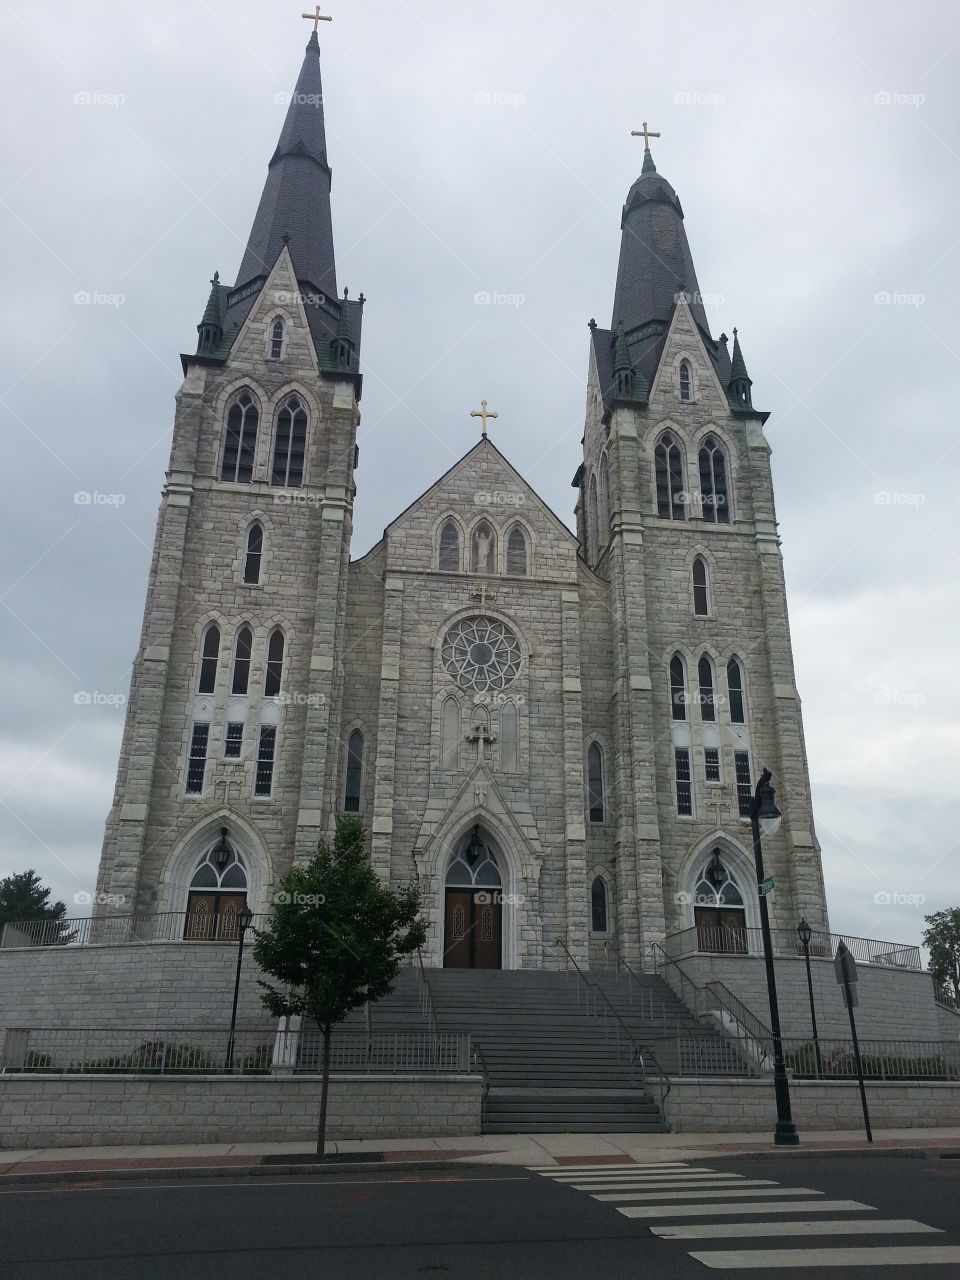 Catholic church. by my house